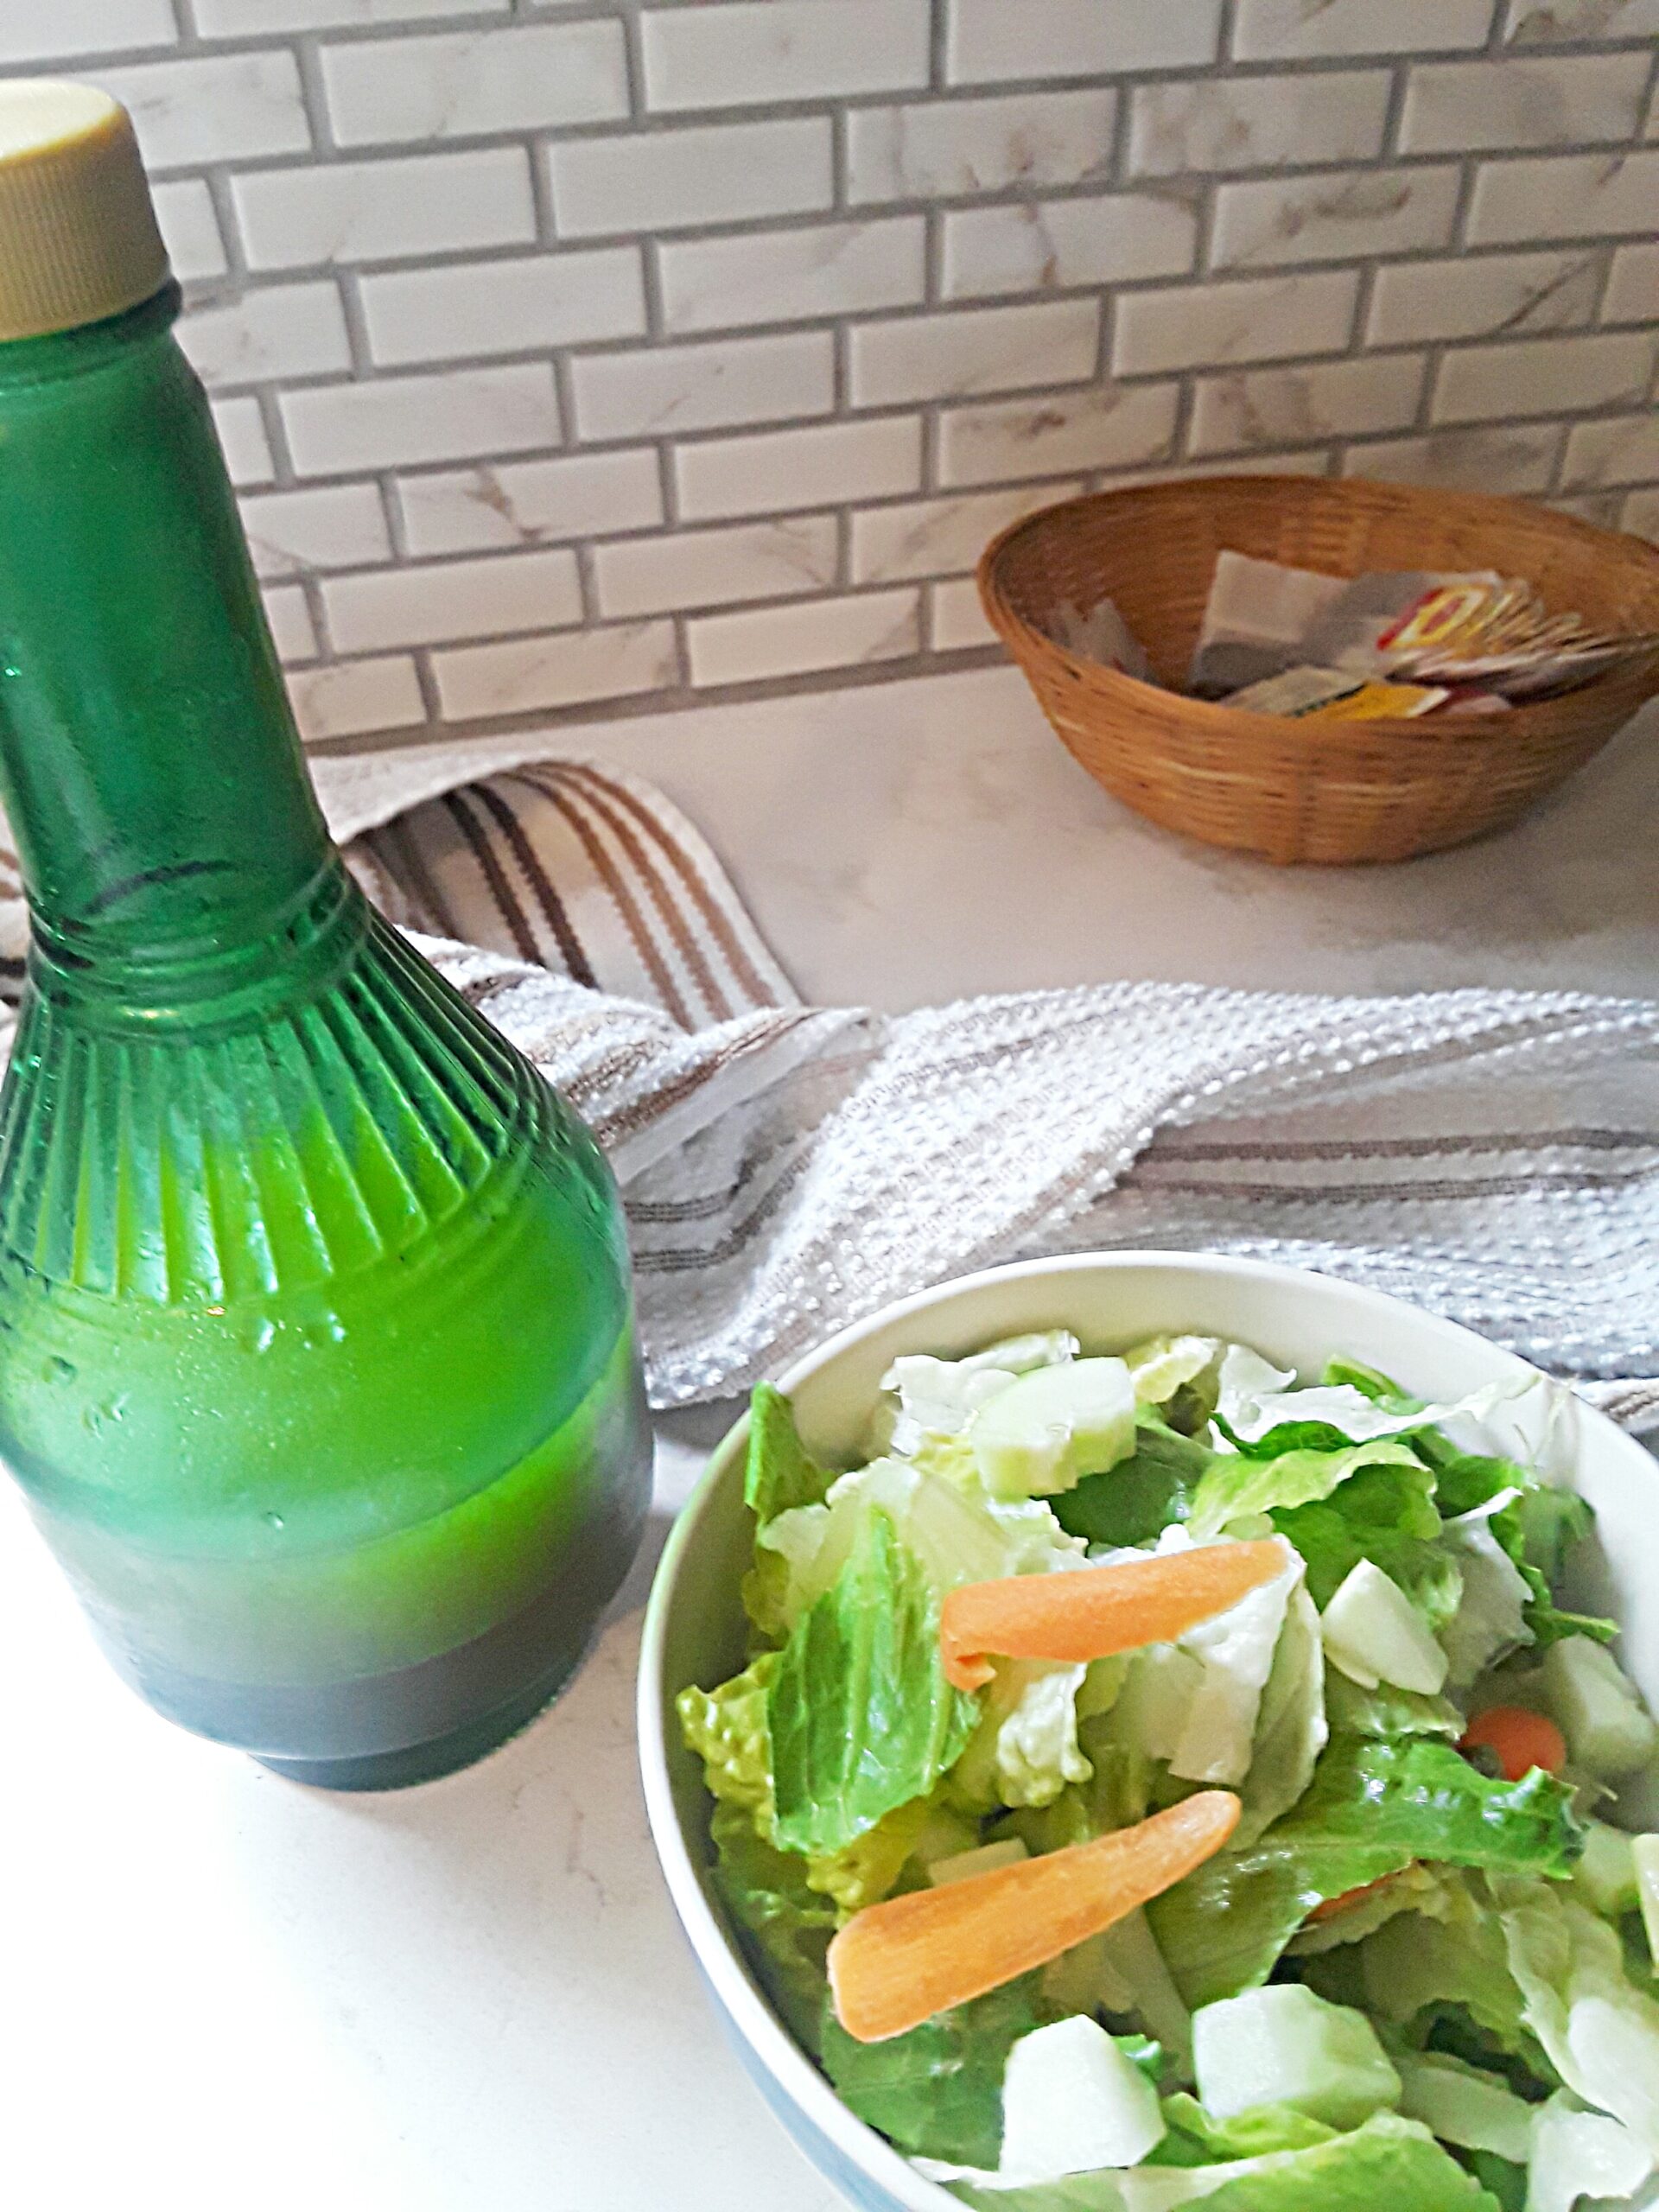 zesty salad dressing in a green bottle next to a crispy green salad.